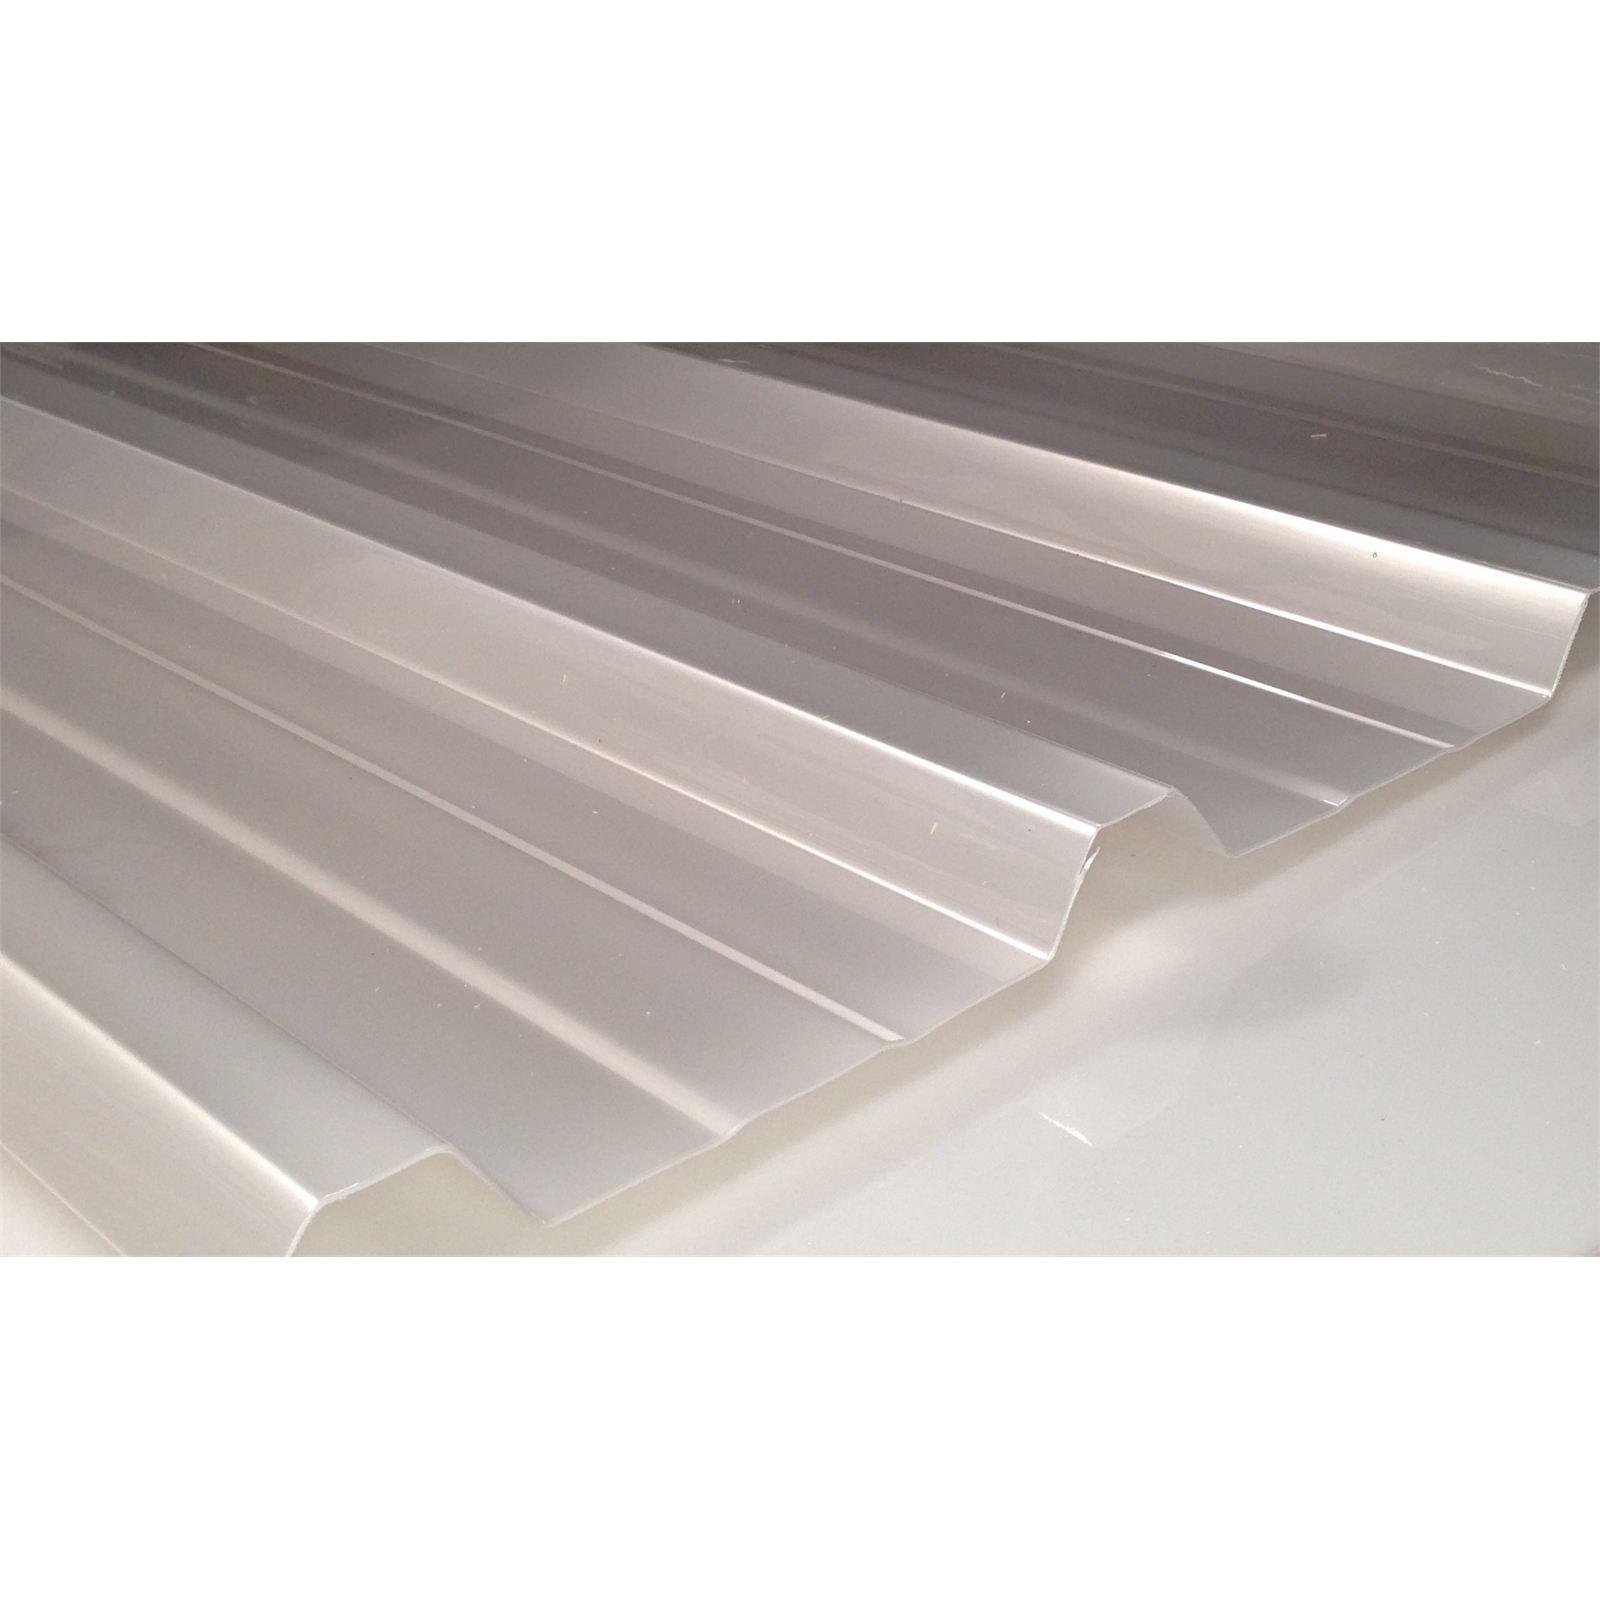 Suntuf Trimdek 1.0 x 3.0m Metallic Ice Polycarbonate Roofing